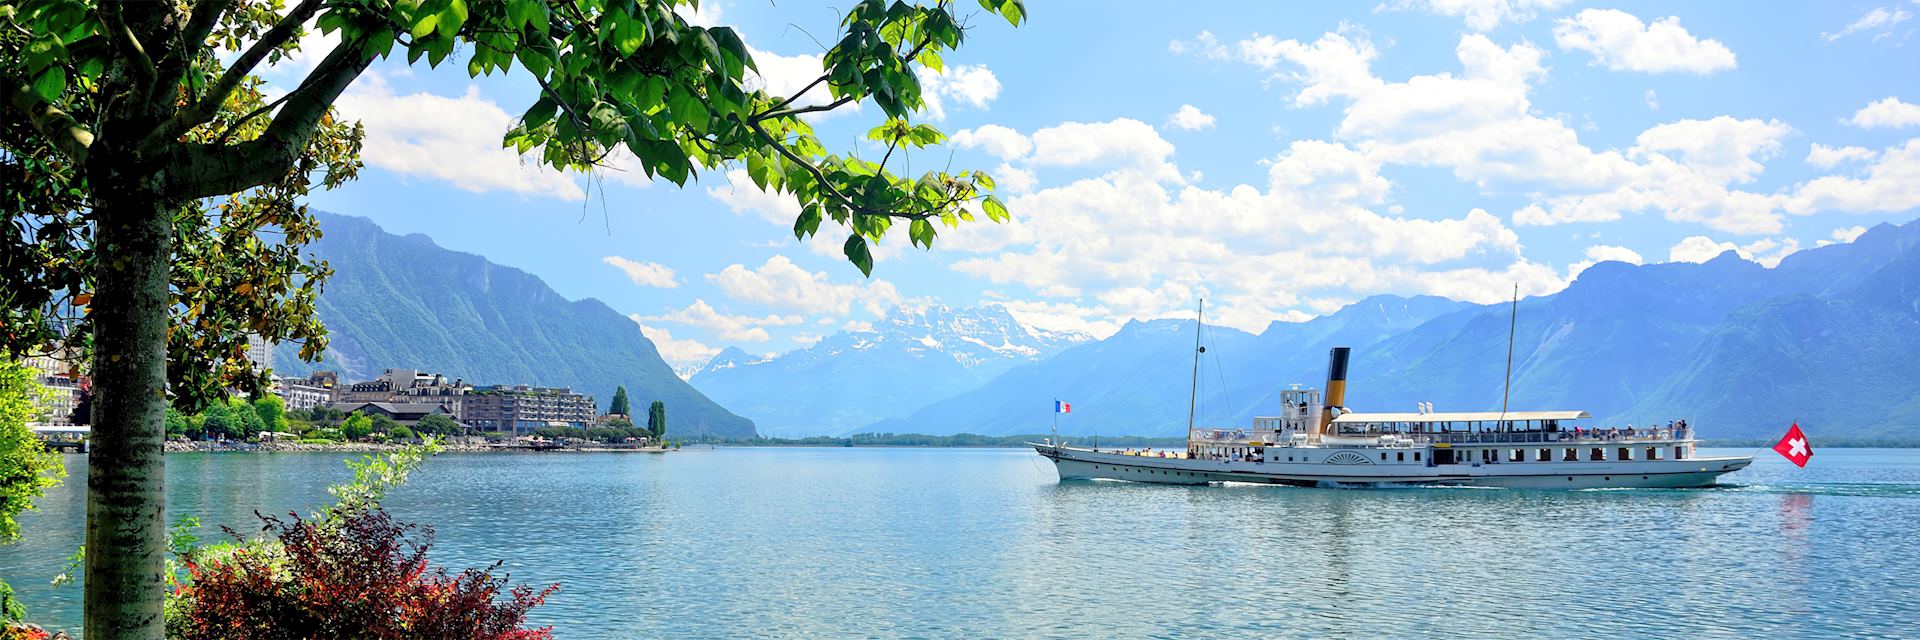 Montreux, Lake Geneva